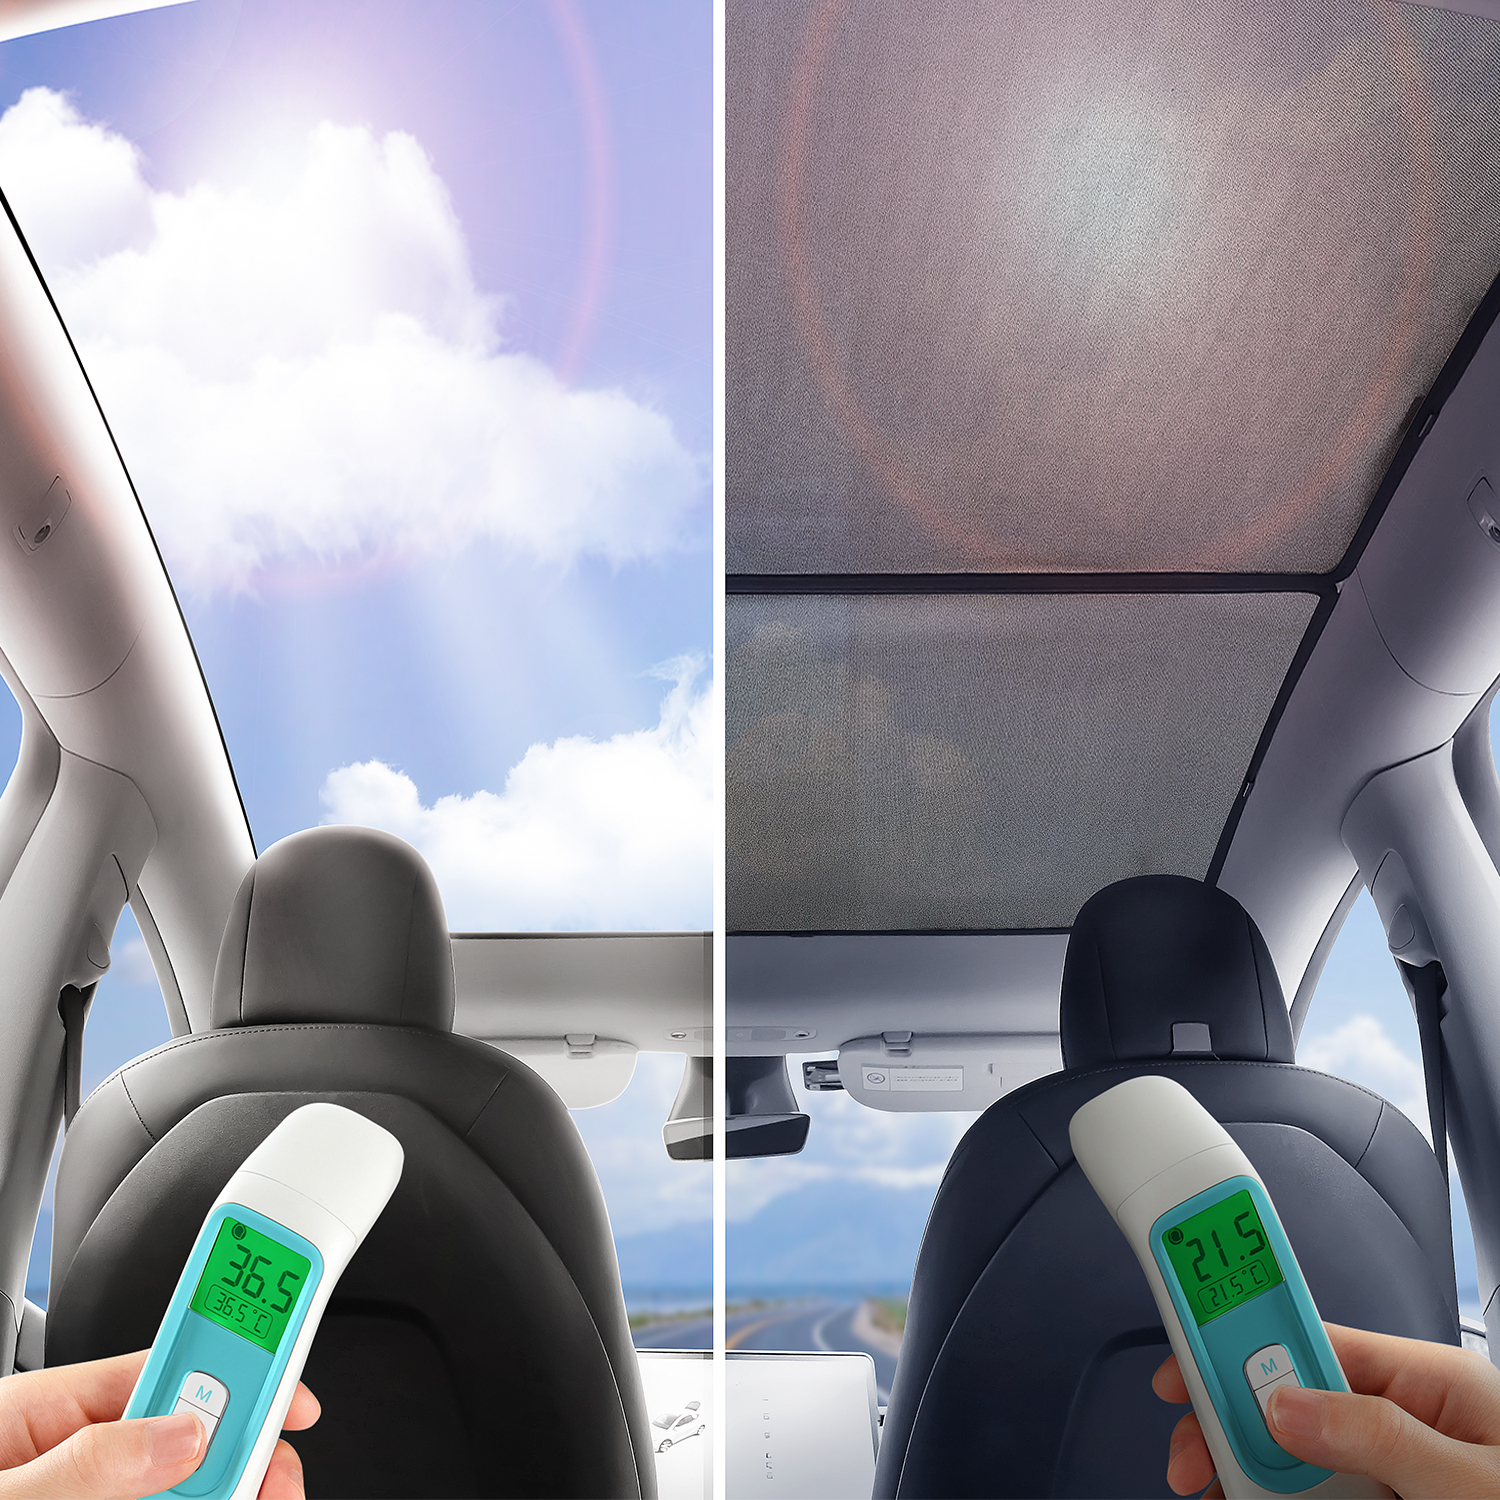 High heat development in the Tesla interior! A sunscreen can help